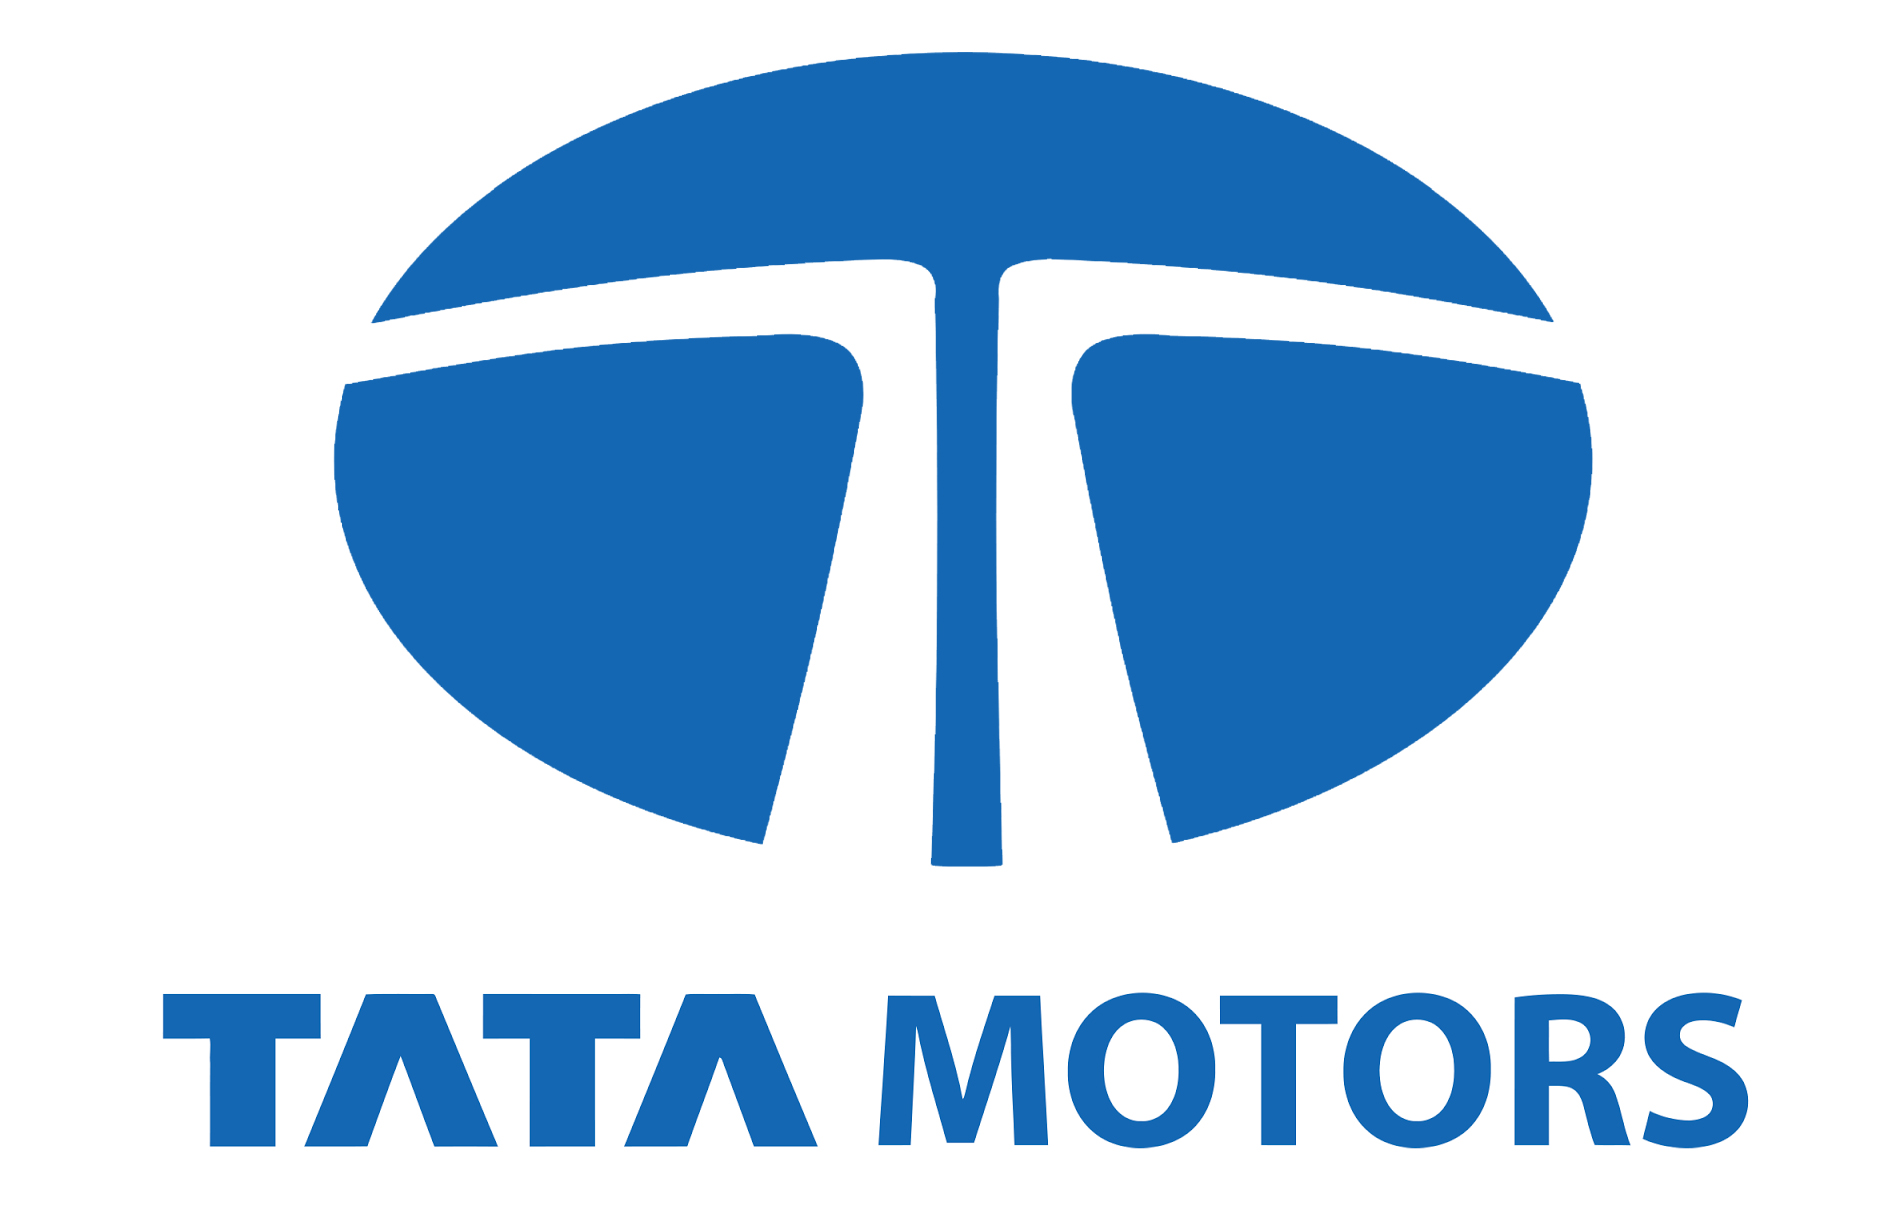 Tata Motors Cars Showroom - Dion Automotives|Show Room|Automotive